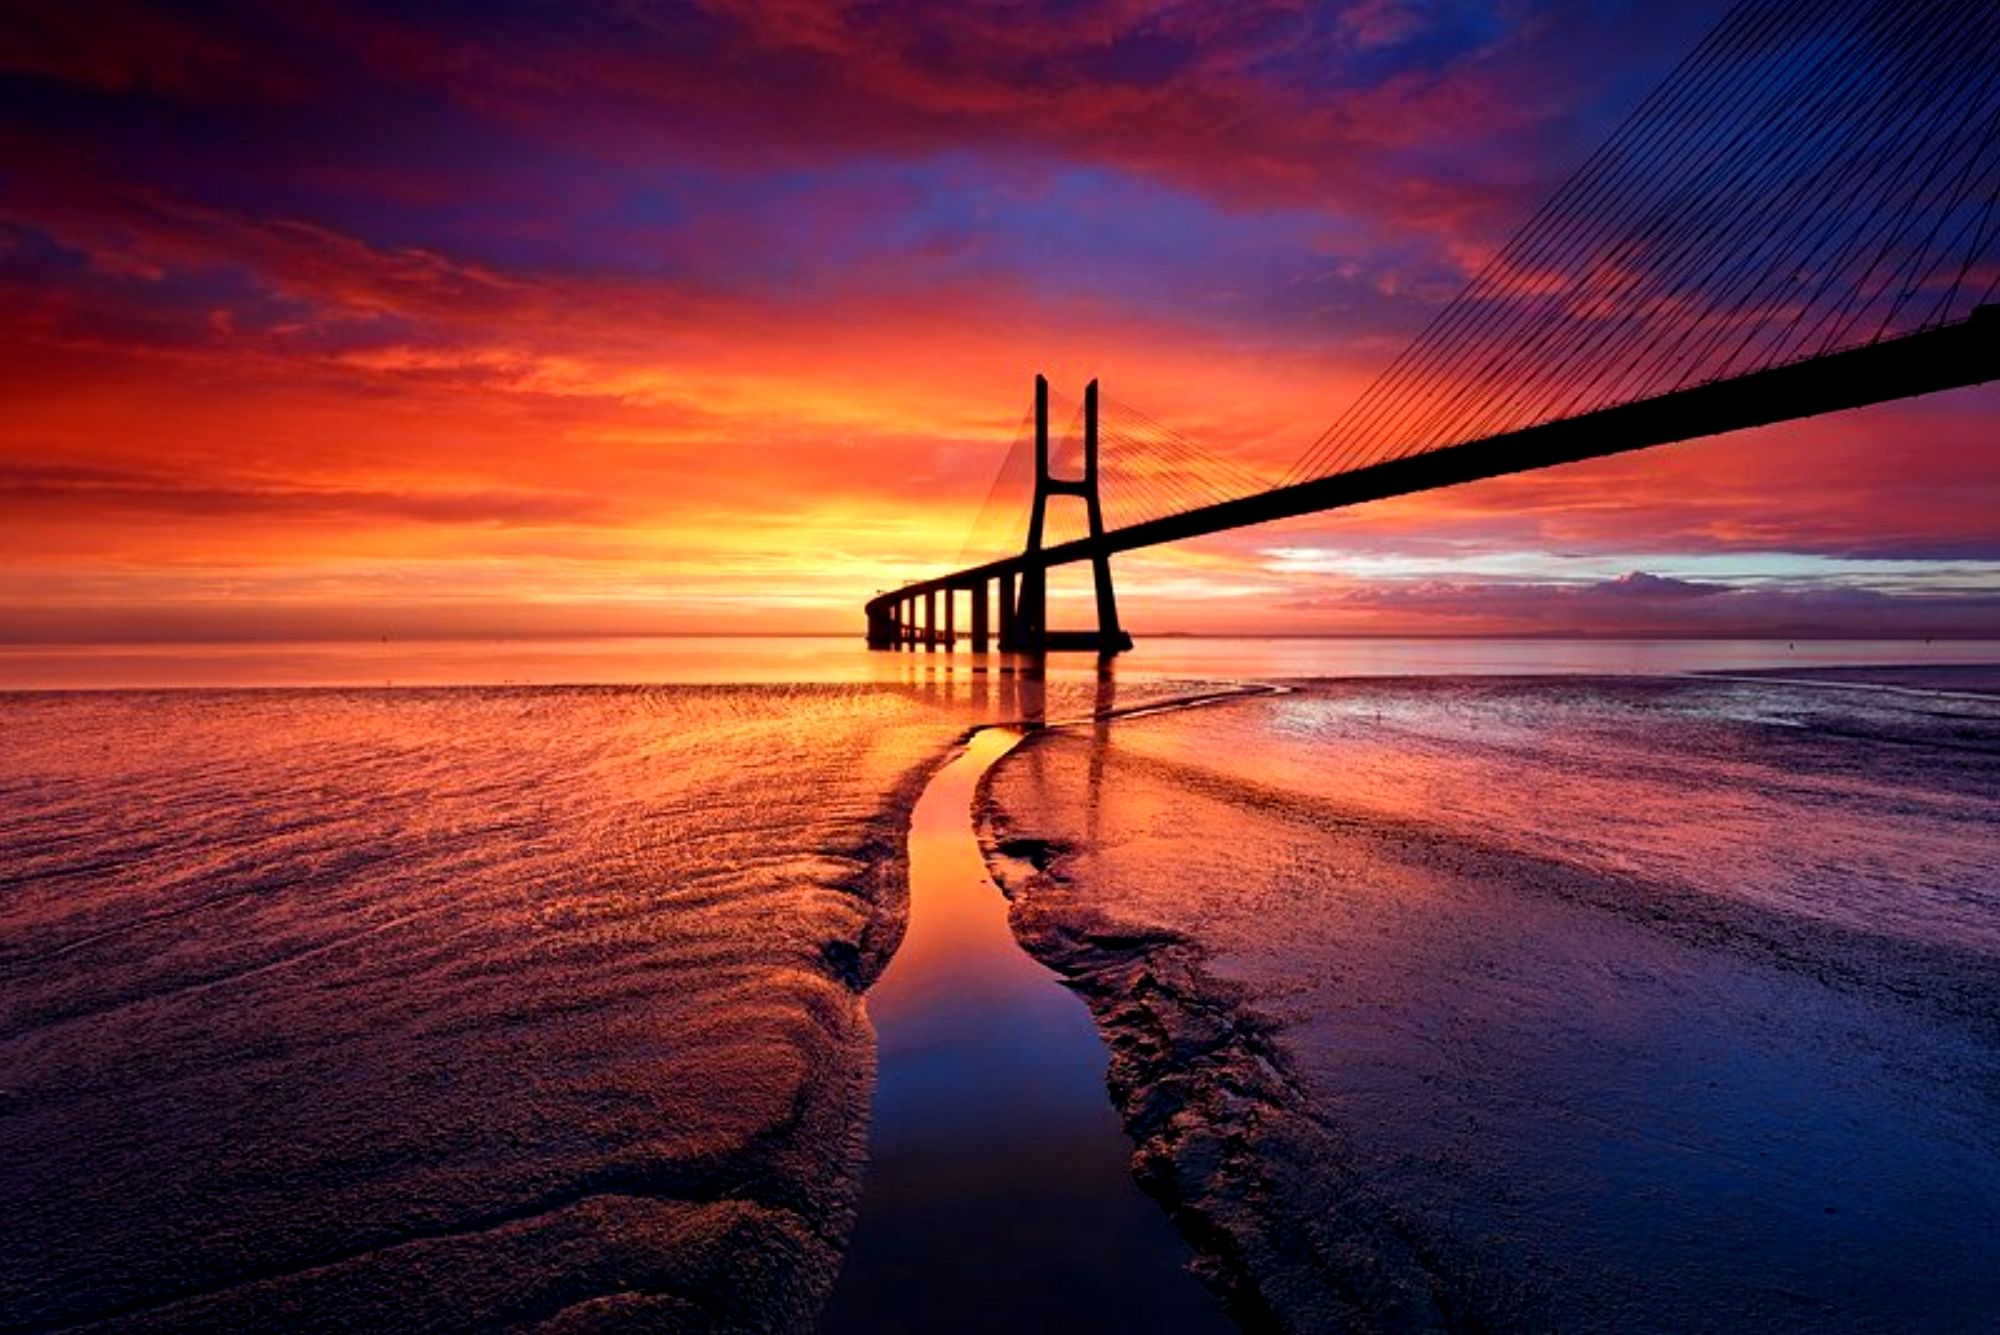 bridges #sunset | Sunsets/Sunrises | Pinterest | Skyscrapers ...